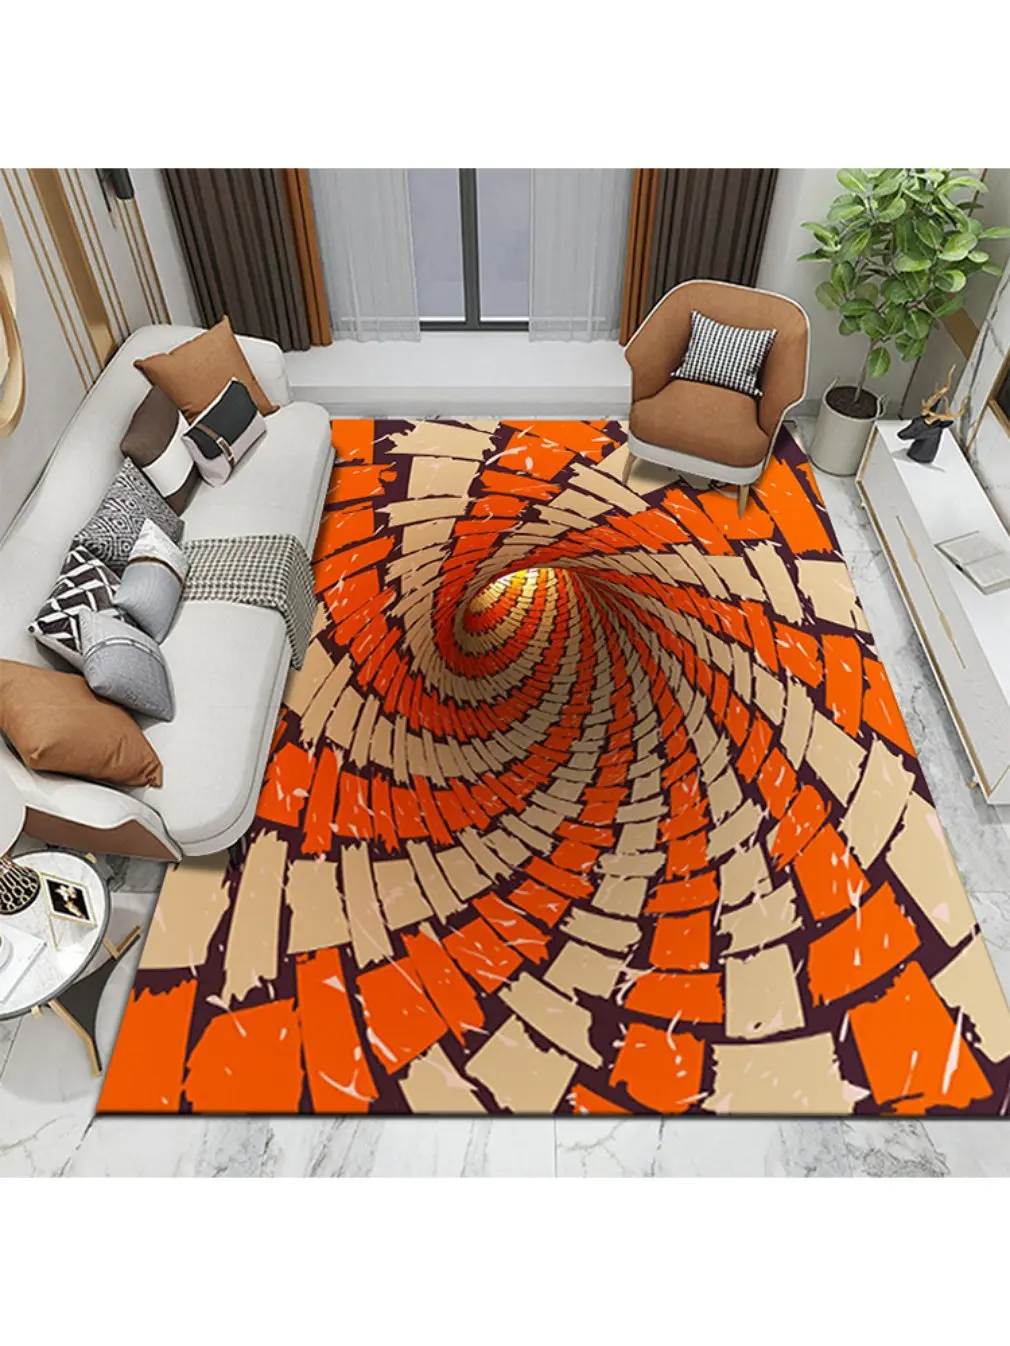 

3D Vision Carpet Orange Swirl Living Room Bedroom Table Non-slip Soft Three-dimensional Floor Mat